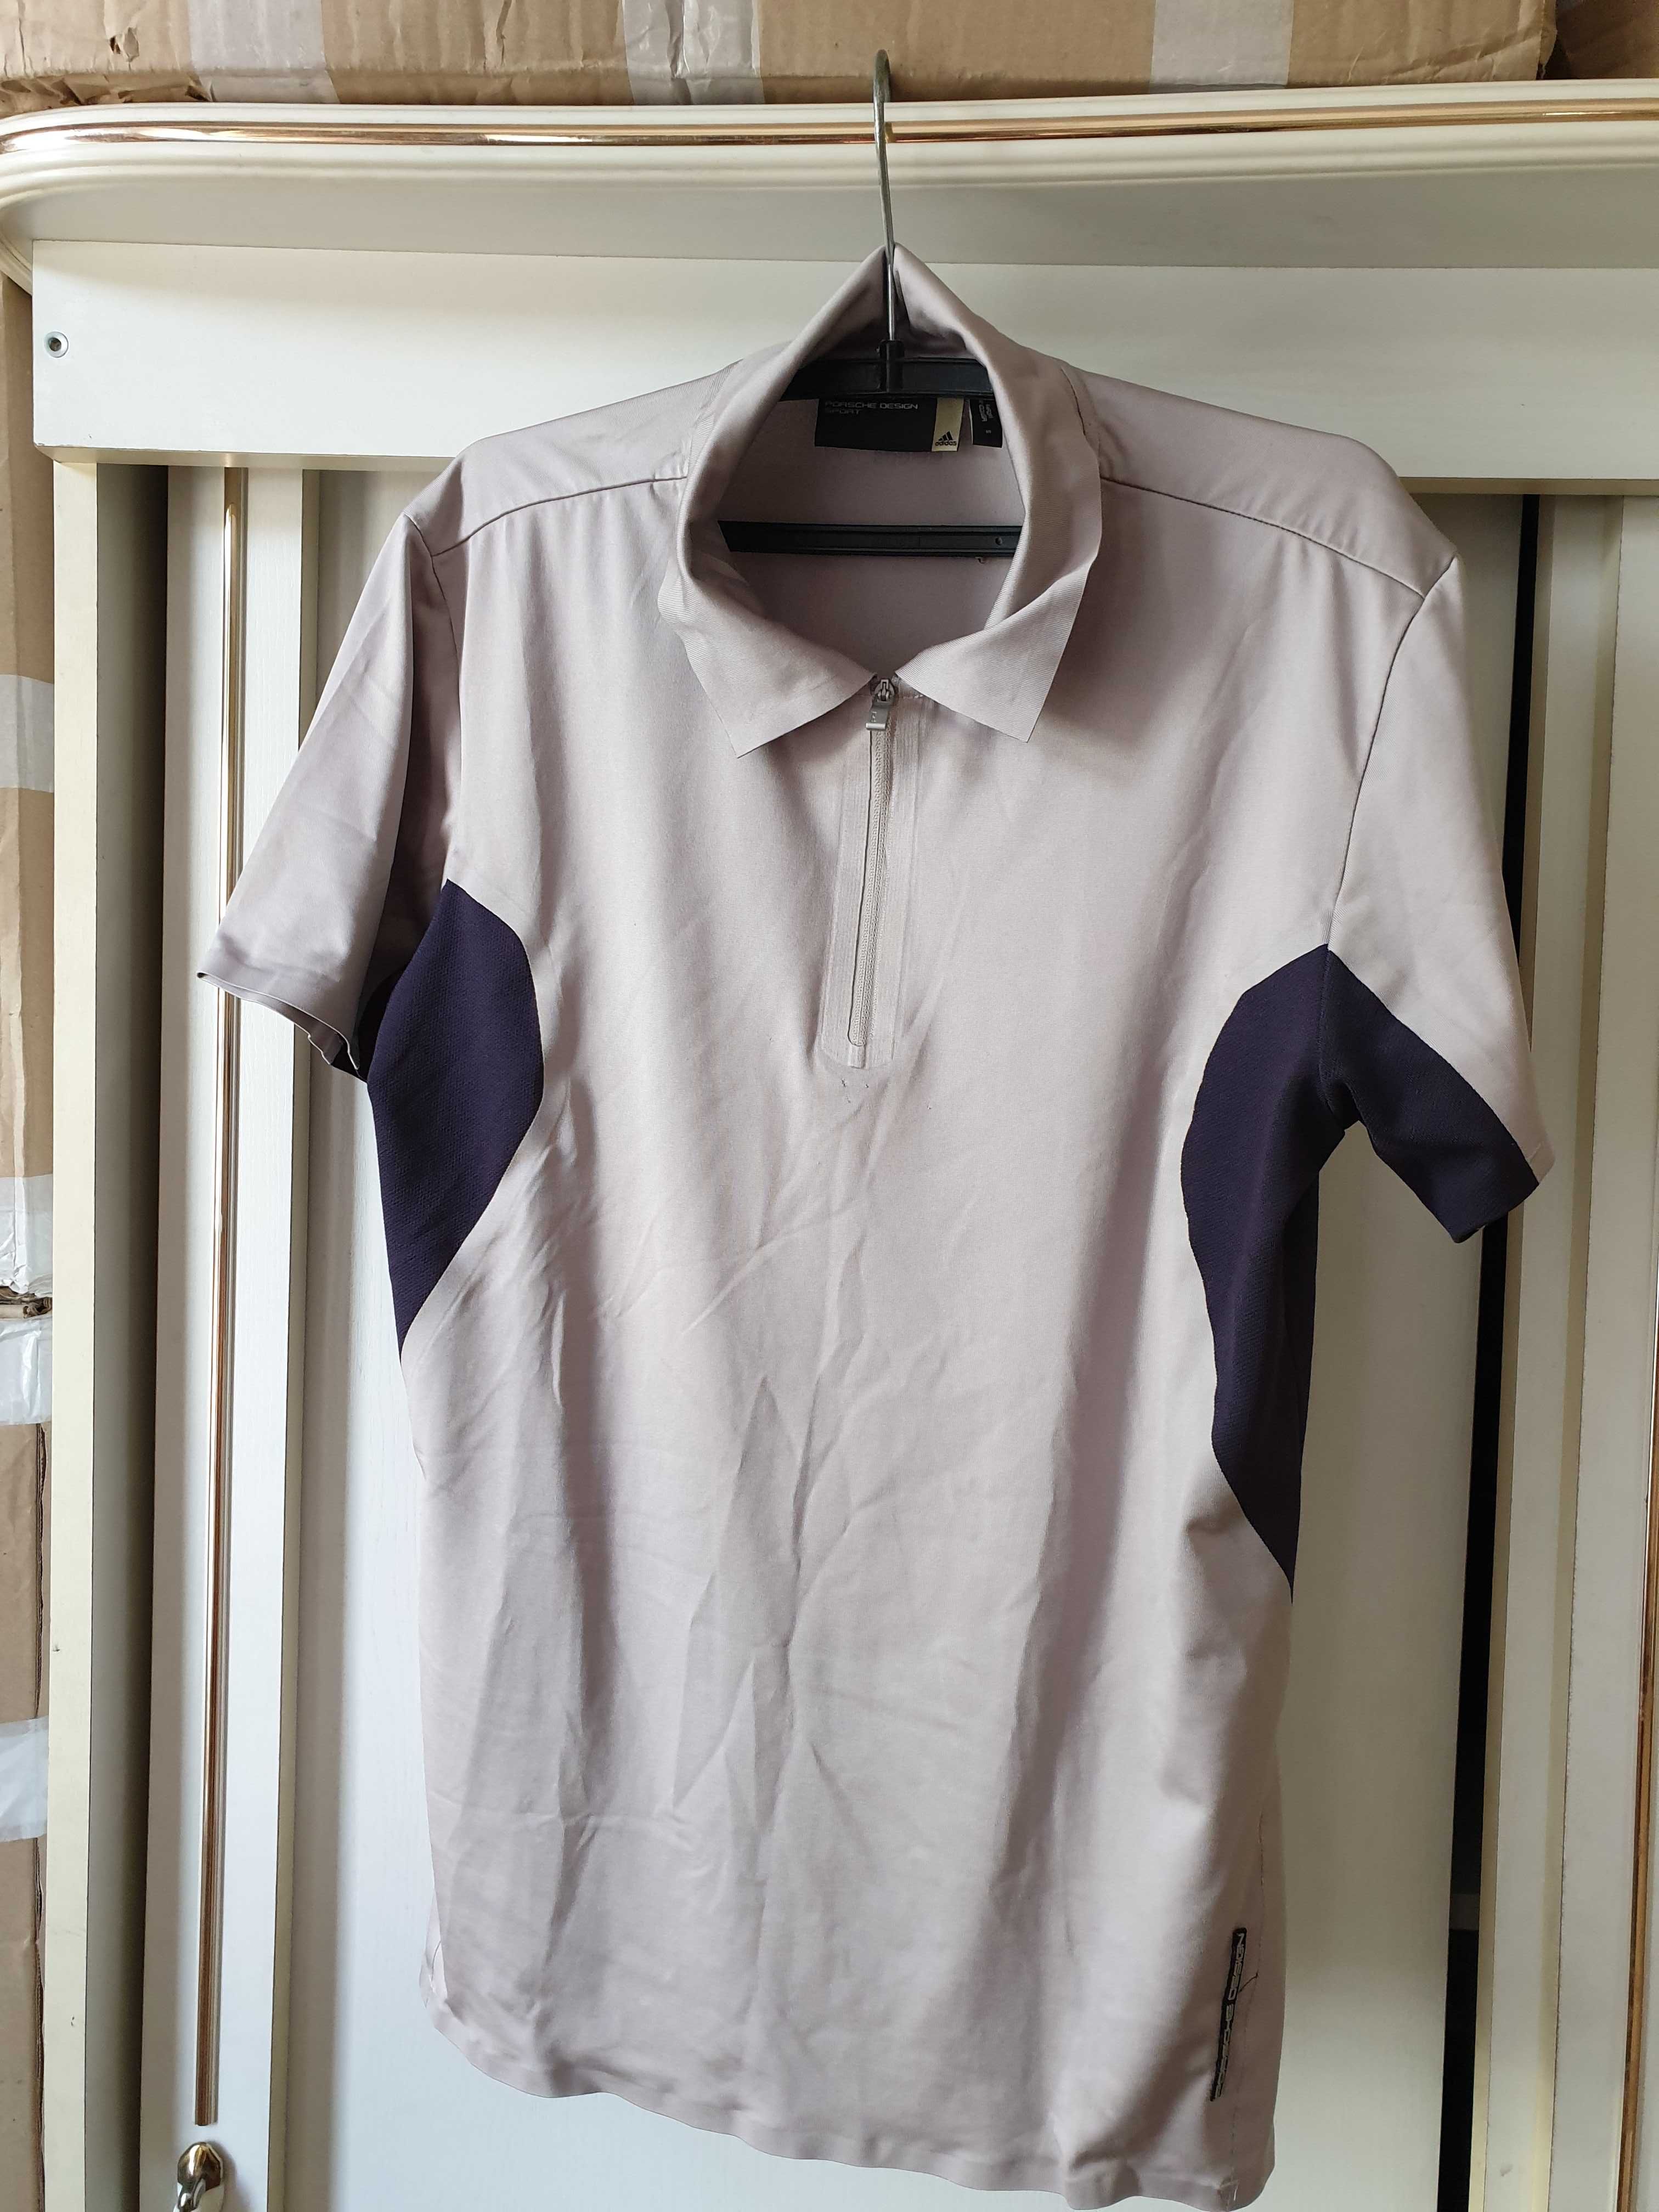 Koszulka męska t-shirt porshe design oryginalne S/M adidas